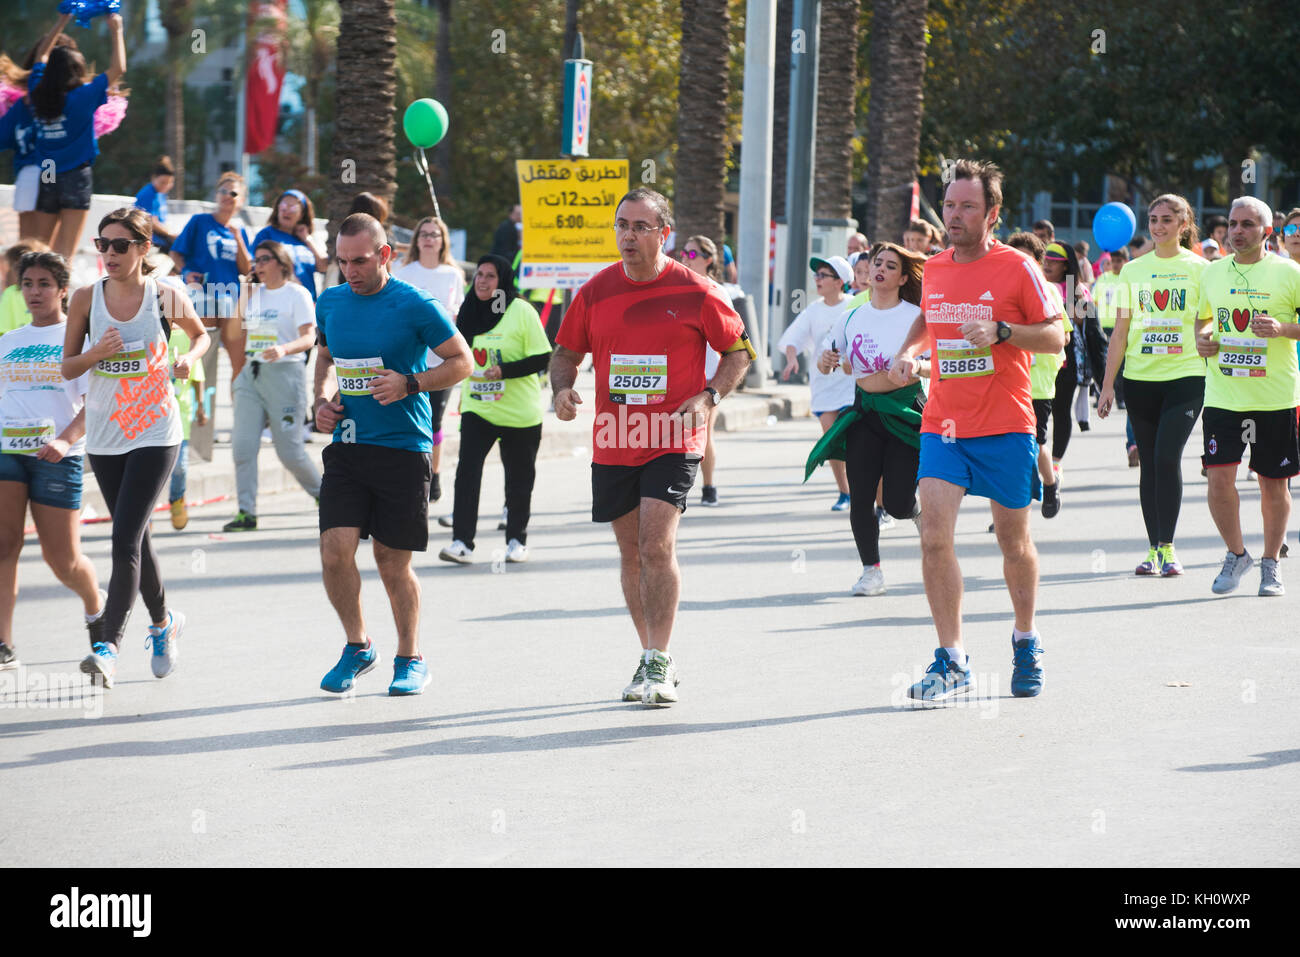 https://c8.alamy.com/comp/KH0WXP/beirut-lebanon-12th-nov-2017-people-running-the-blom-bank-beirut-marathon-KH0WXP.jpg
